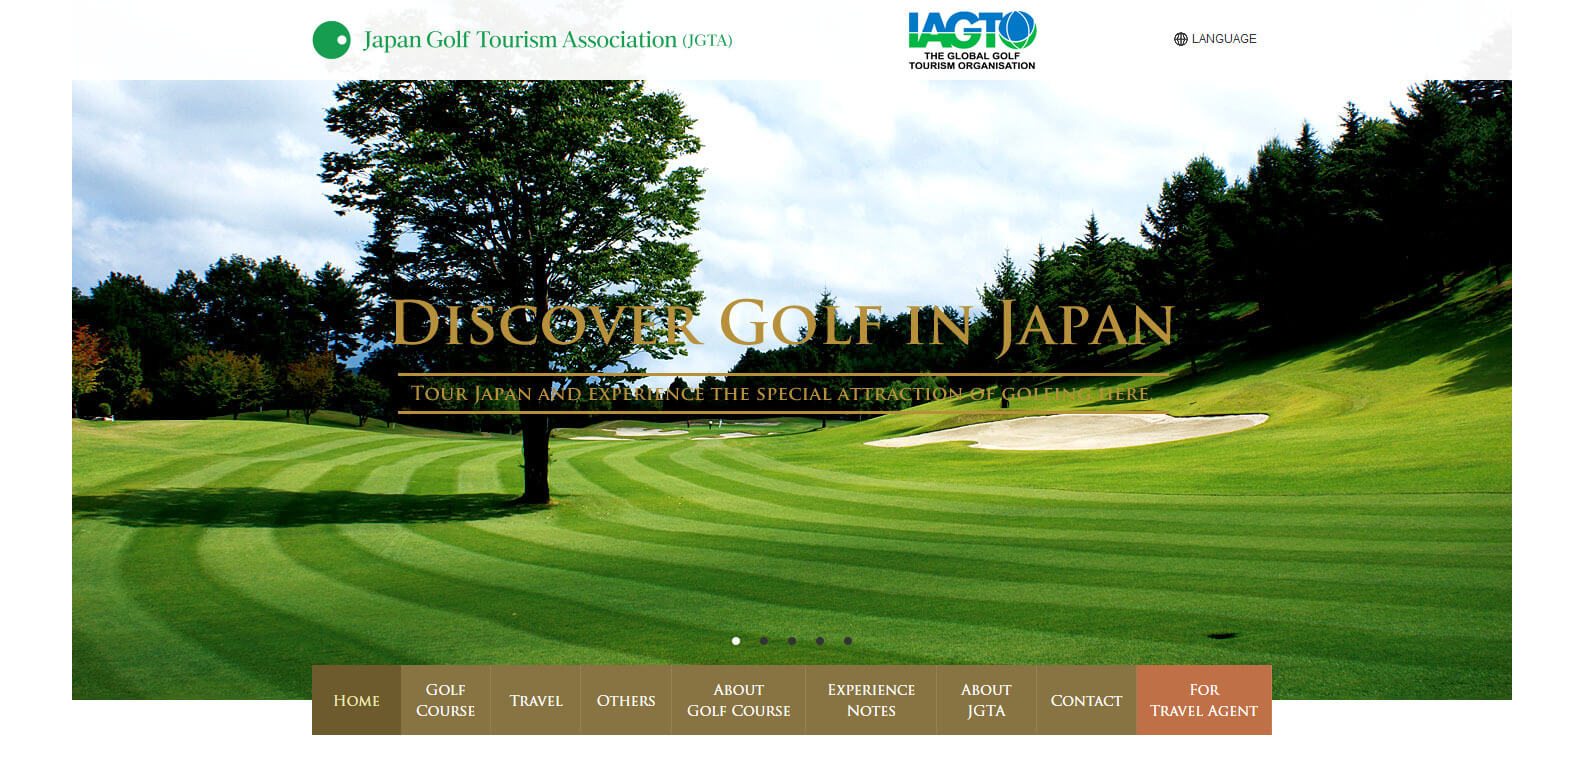 Japan Golf Tourism Association (JGTA)